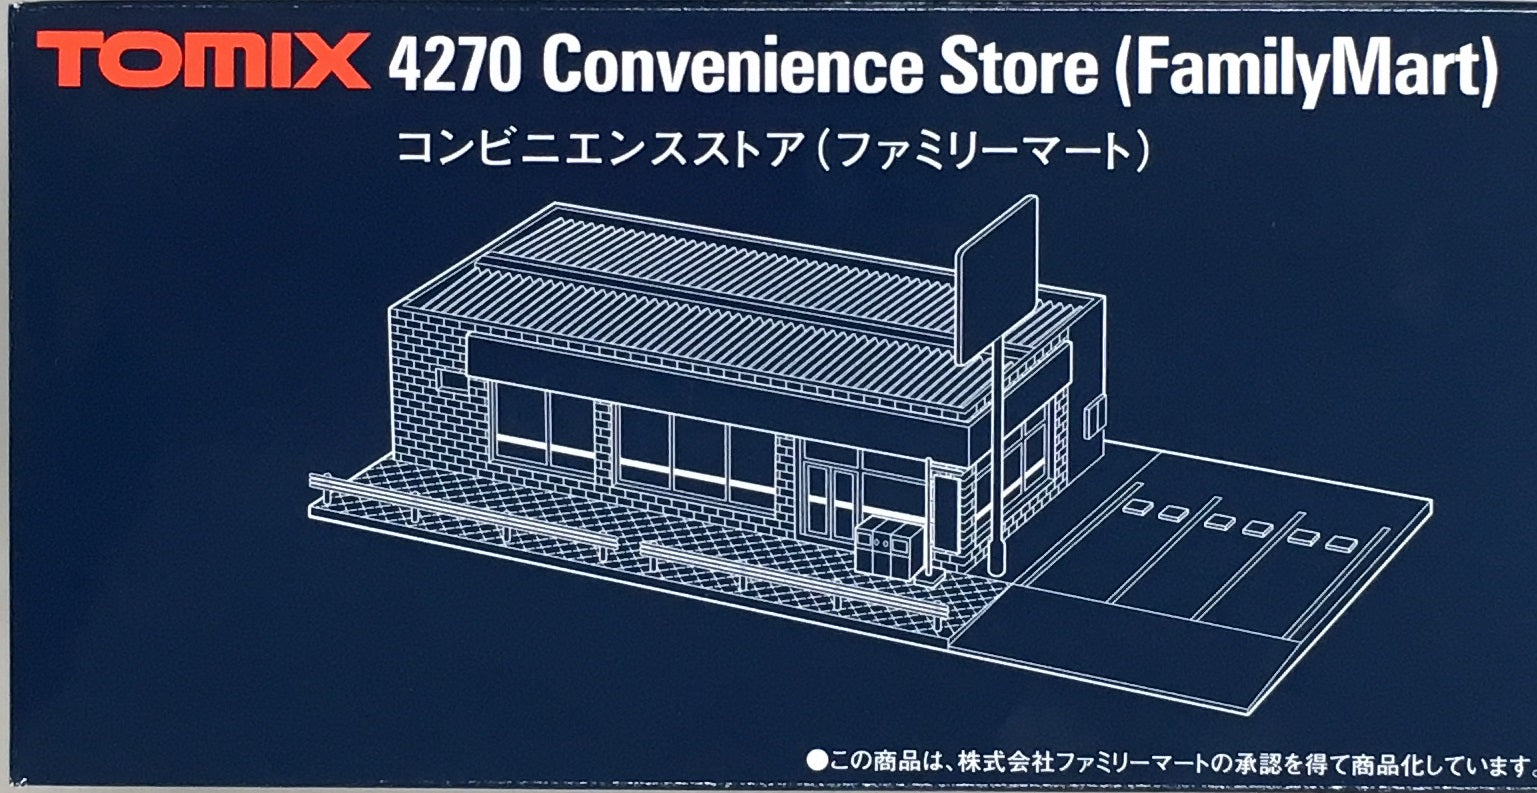 Convenience Store (FamilyMart) 2